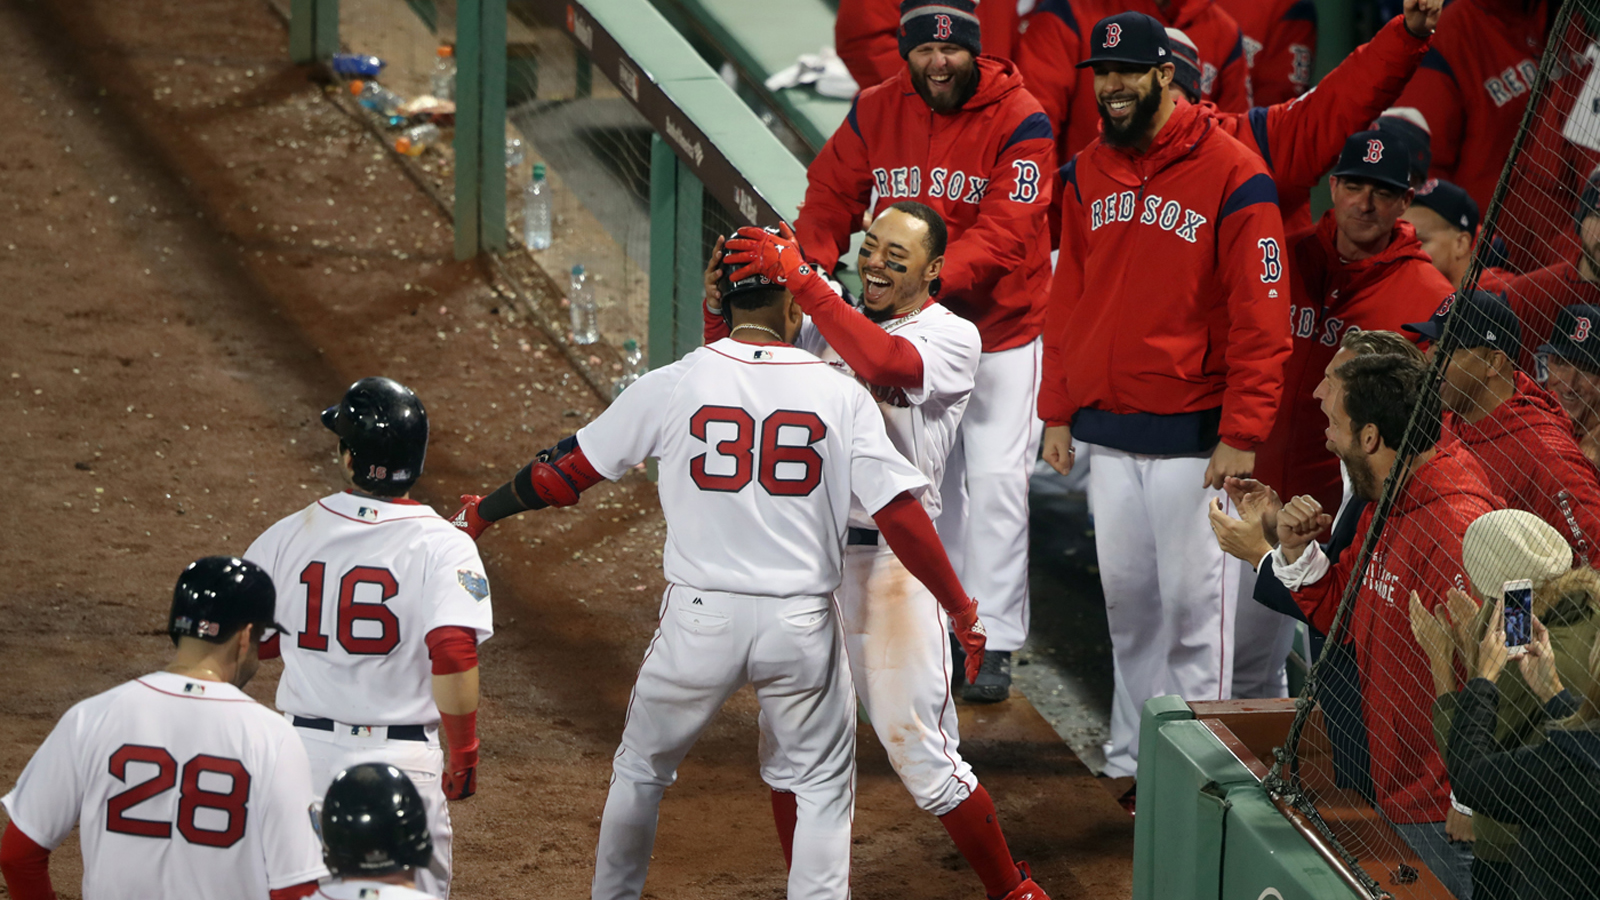 Nomar Garciaparra leads Red Sox hit parade - The Boston Globe